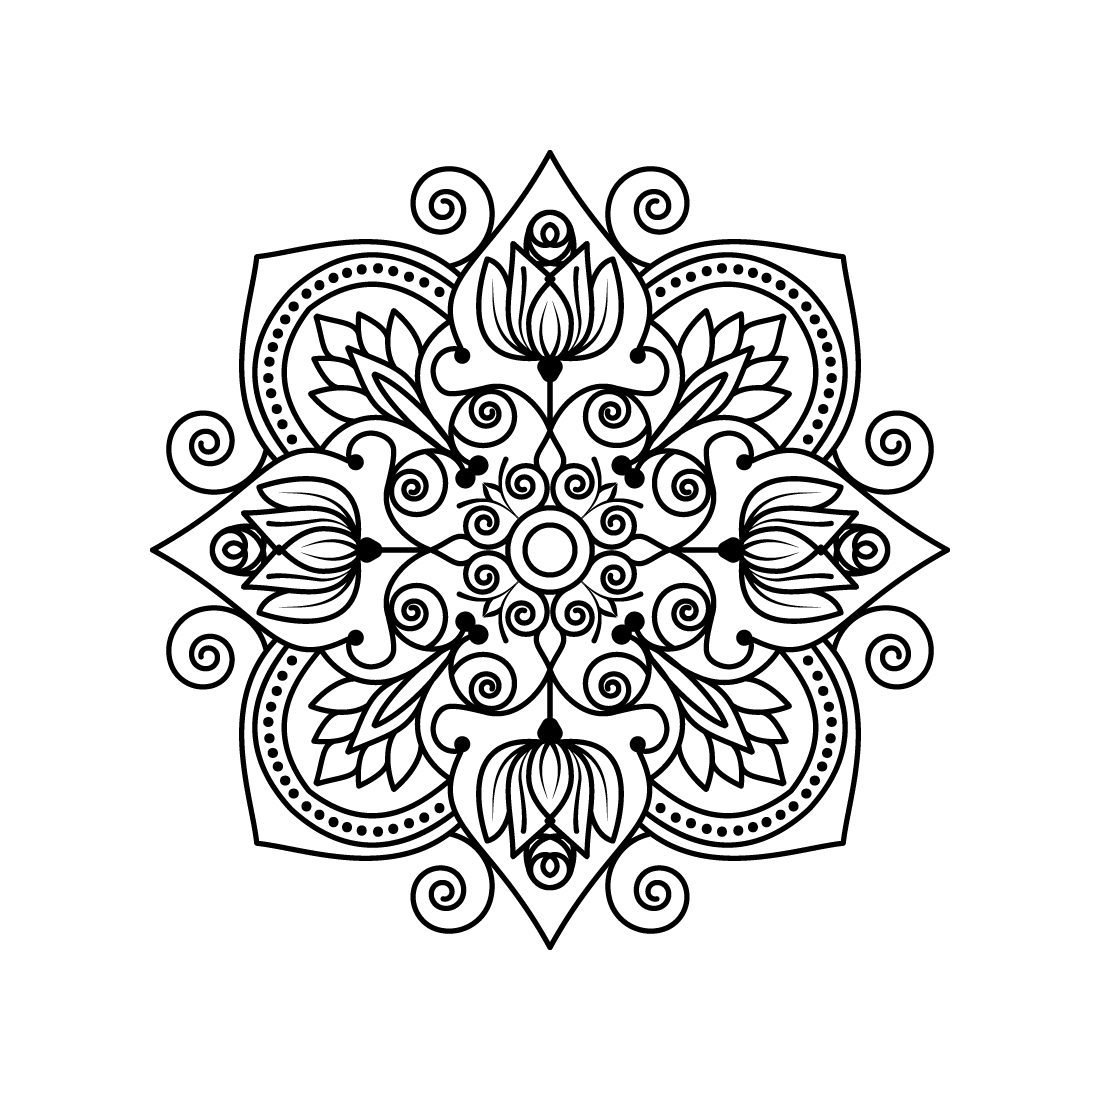 Bundle of 10 Ornamental Mandala Coloring Book Pages preview image.